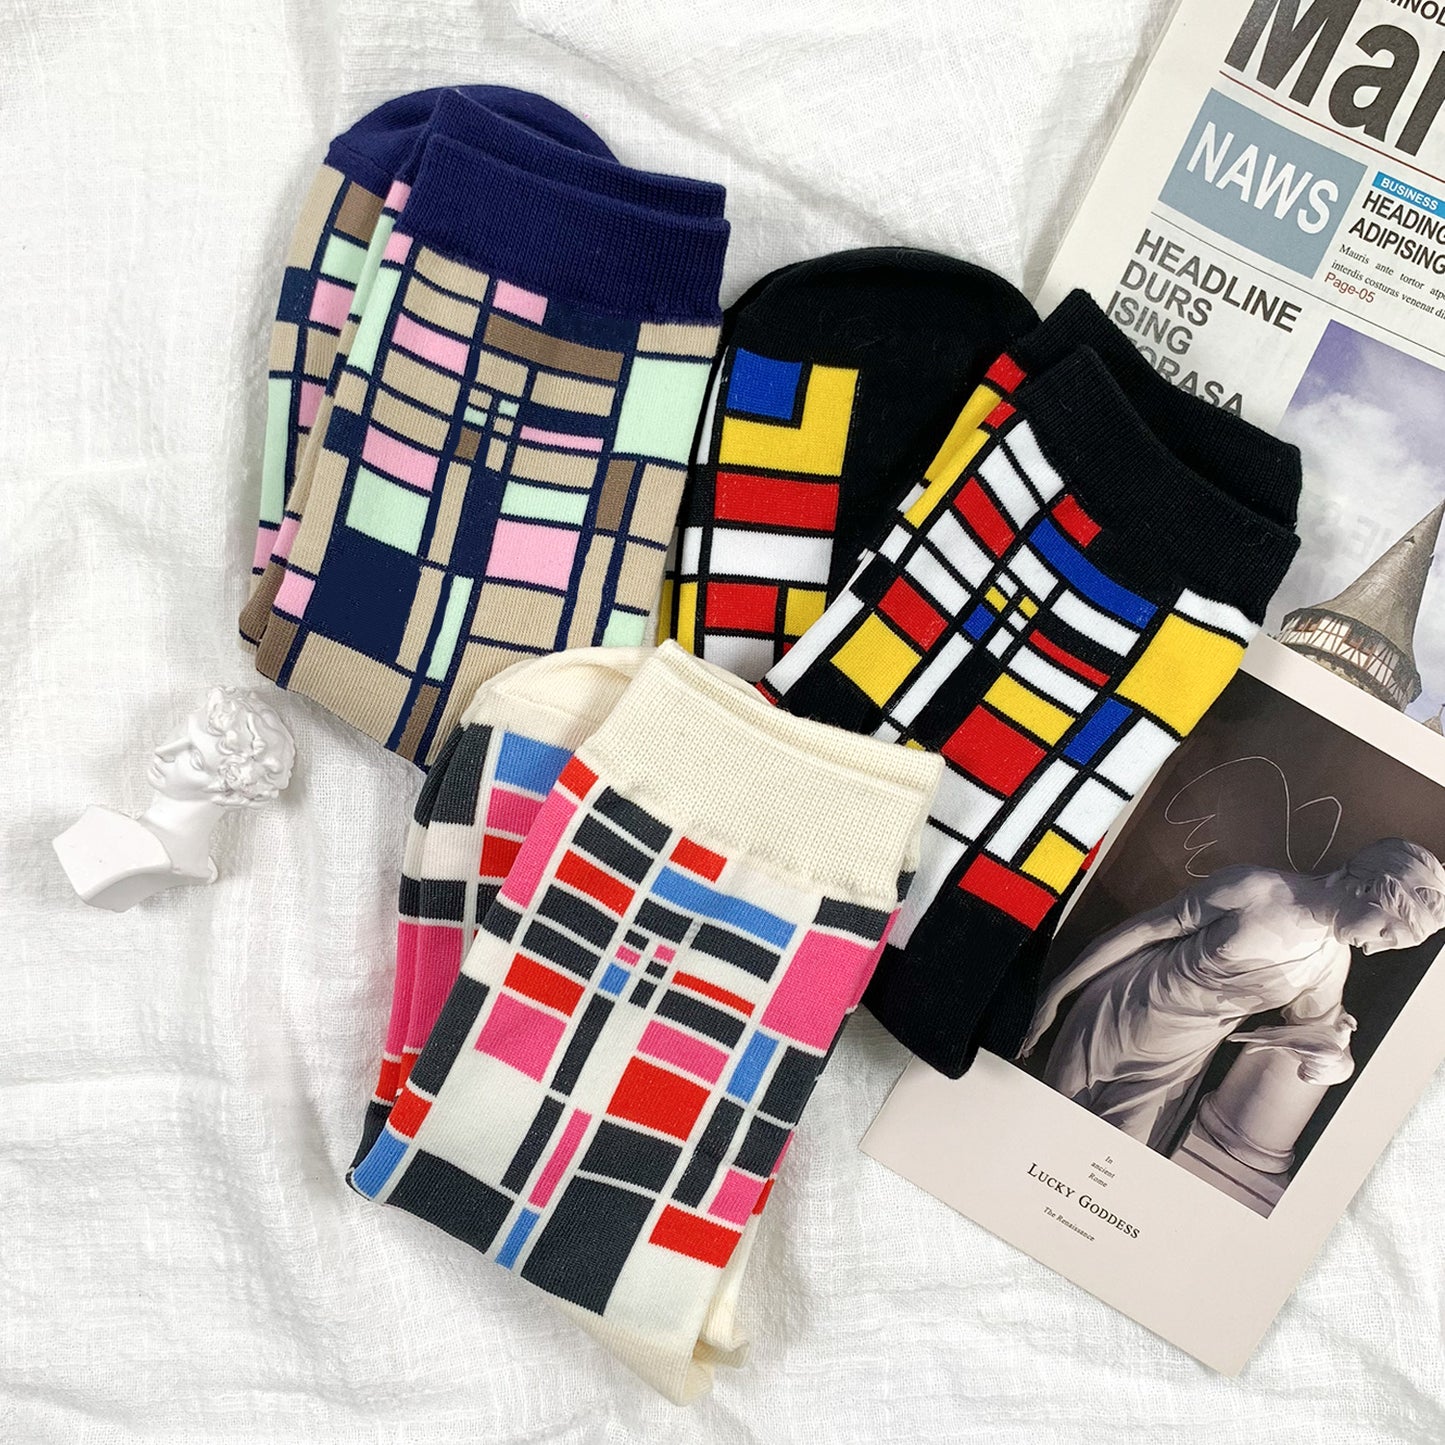 Women's Crew Square Pattern Socks